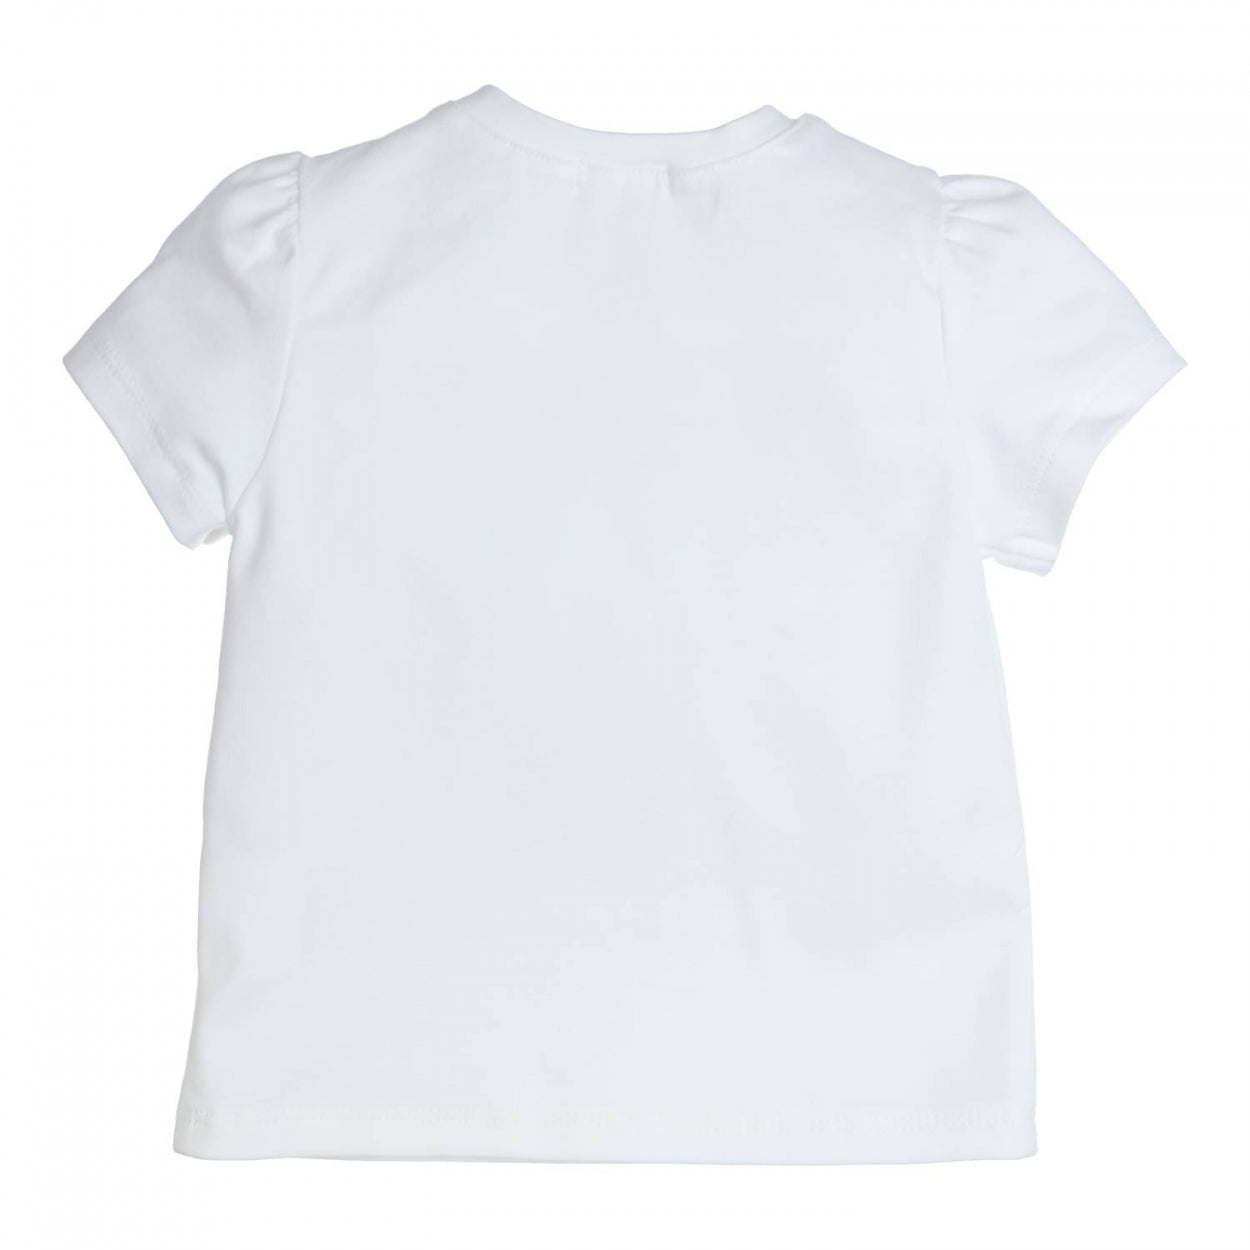 Meisjes T-shirt Aerobic van Gymp in de kleur White in maat 86.